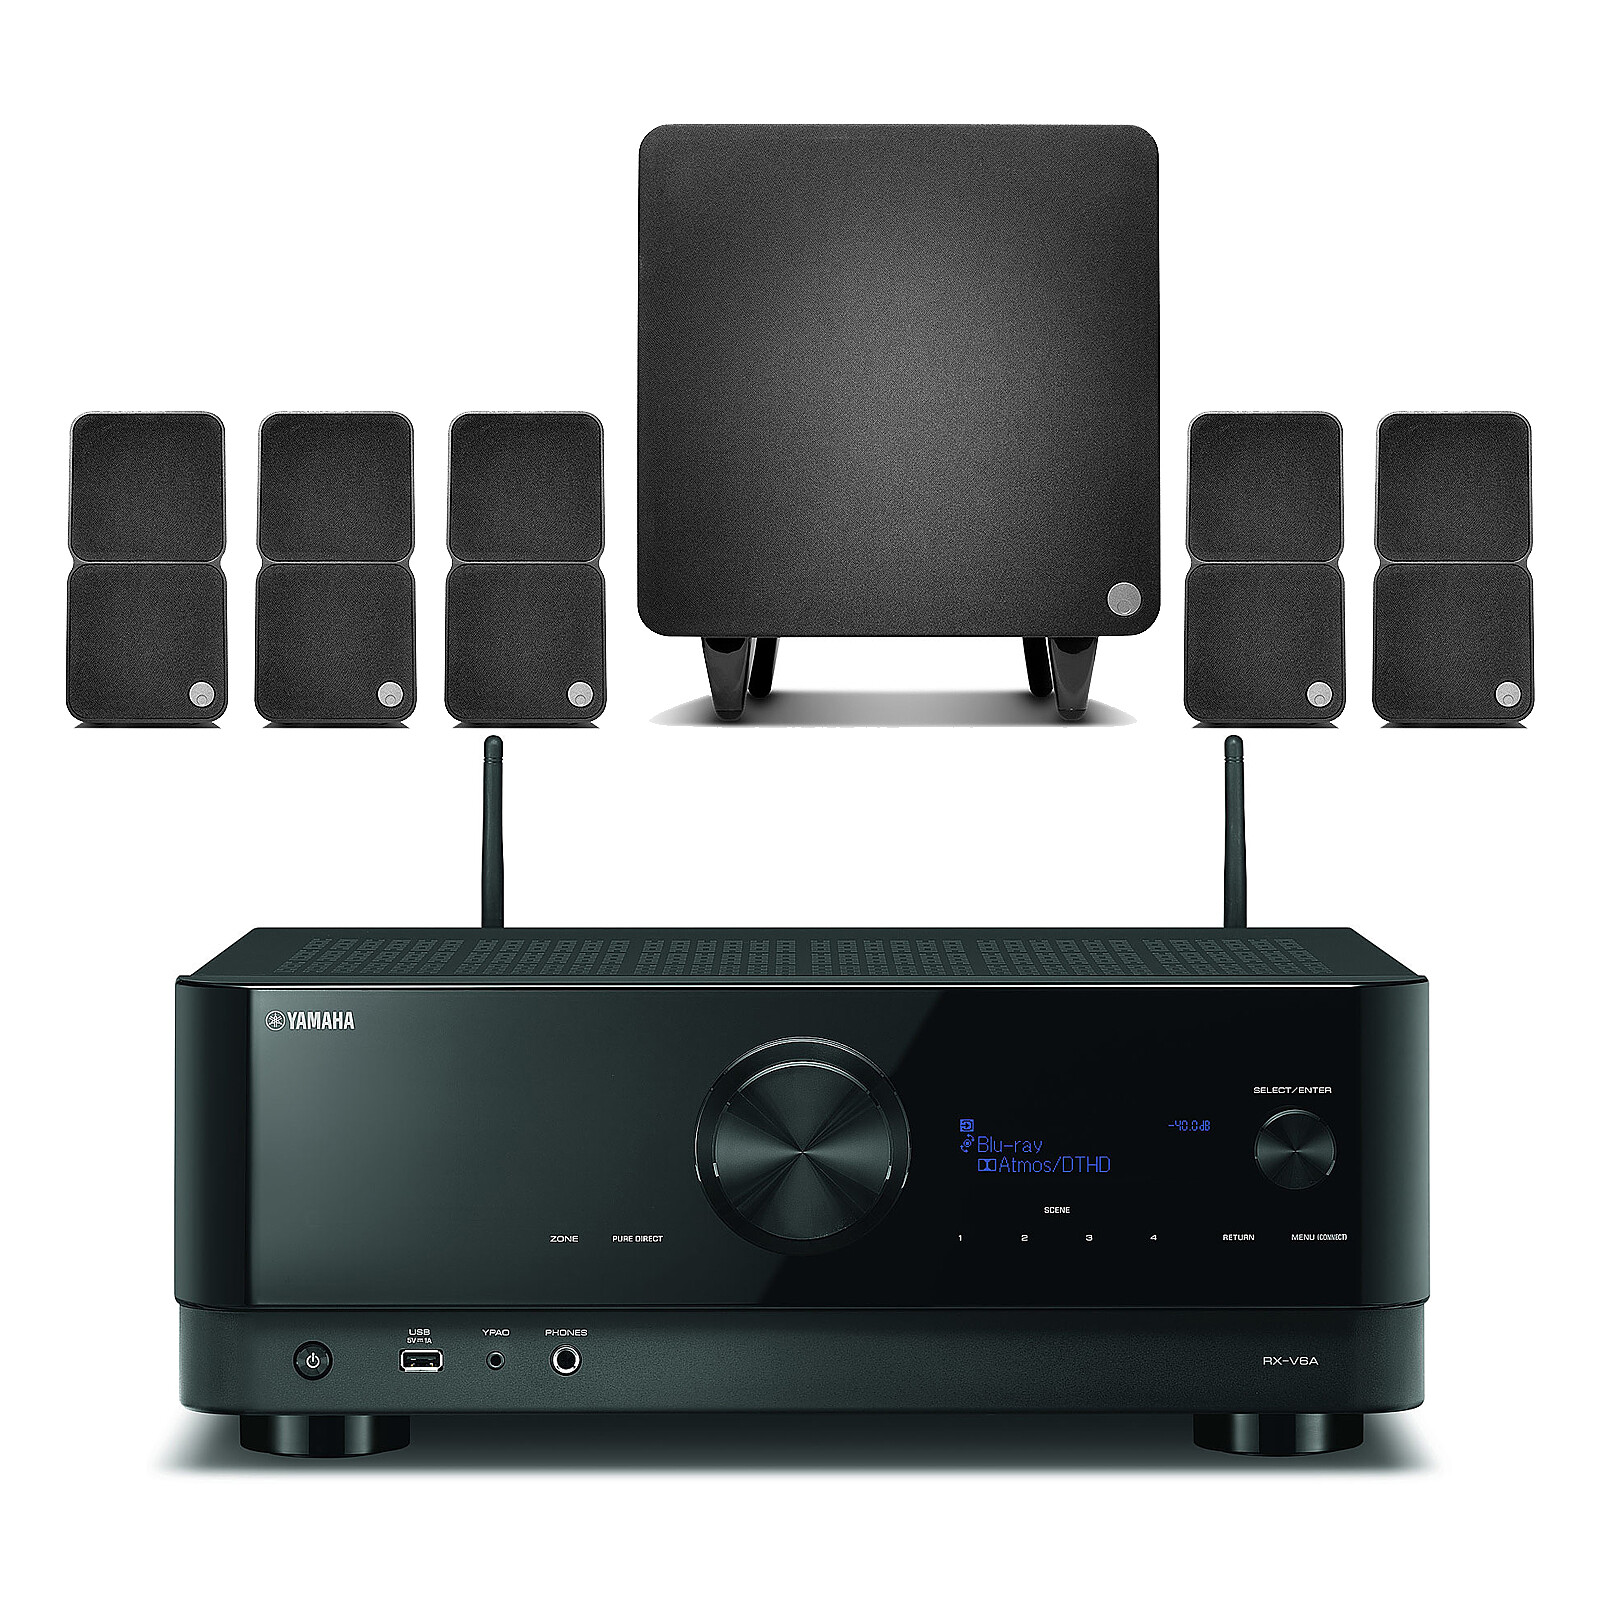 Moley Home system 3-year - Black Black warranty Audio + - Cambridge | RX-V6A theater MINX LDLC S325 Holy Yamaha